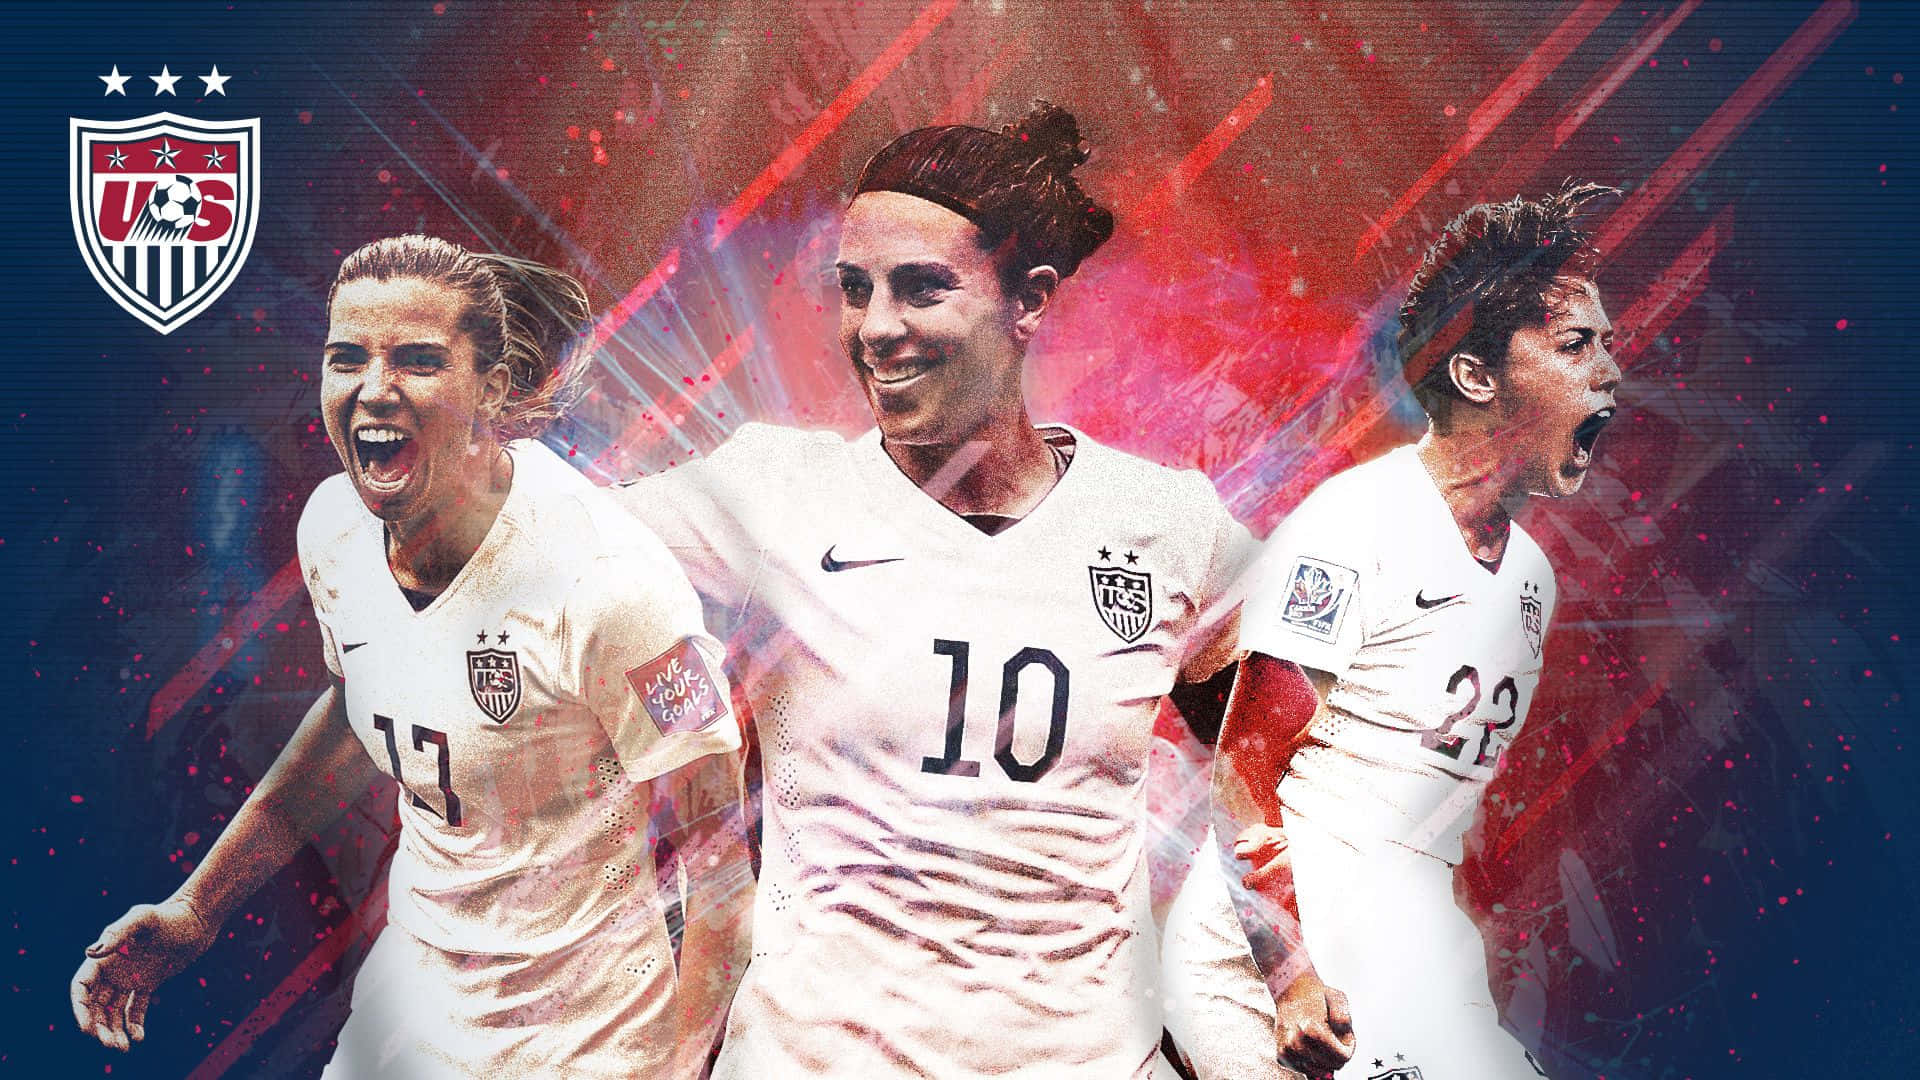 U S Womens Soccer Team Passionand Pride Wallpaper